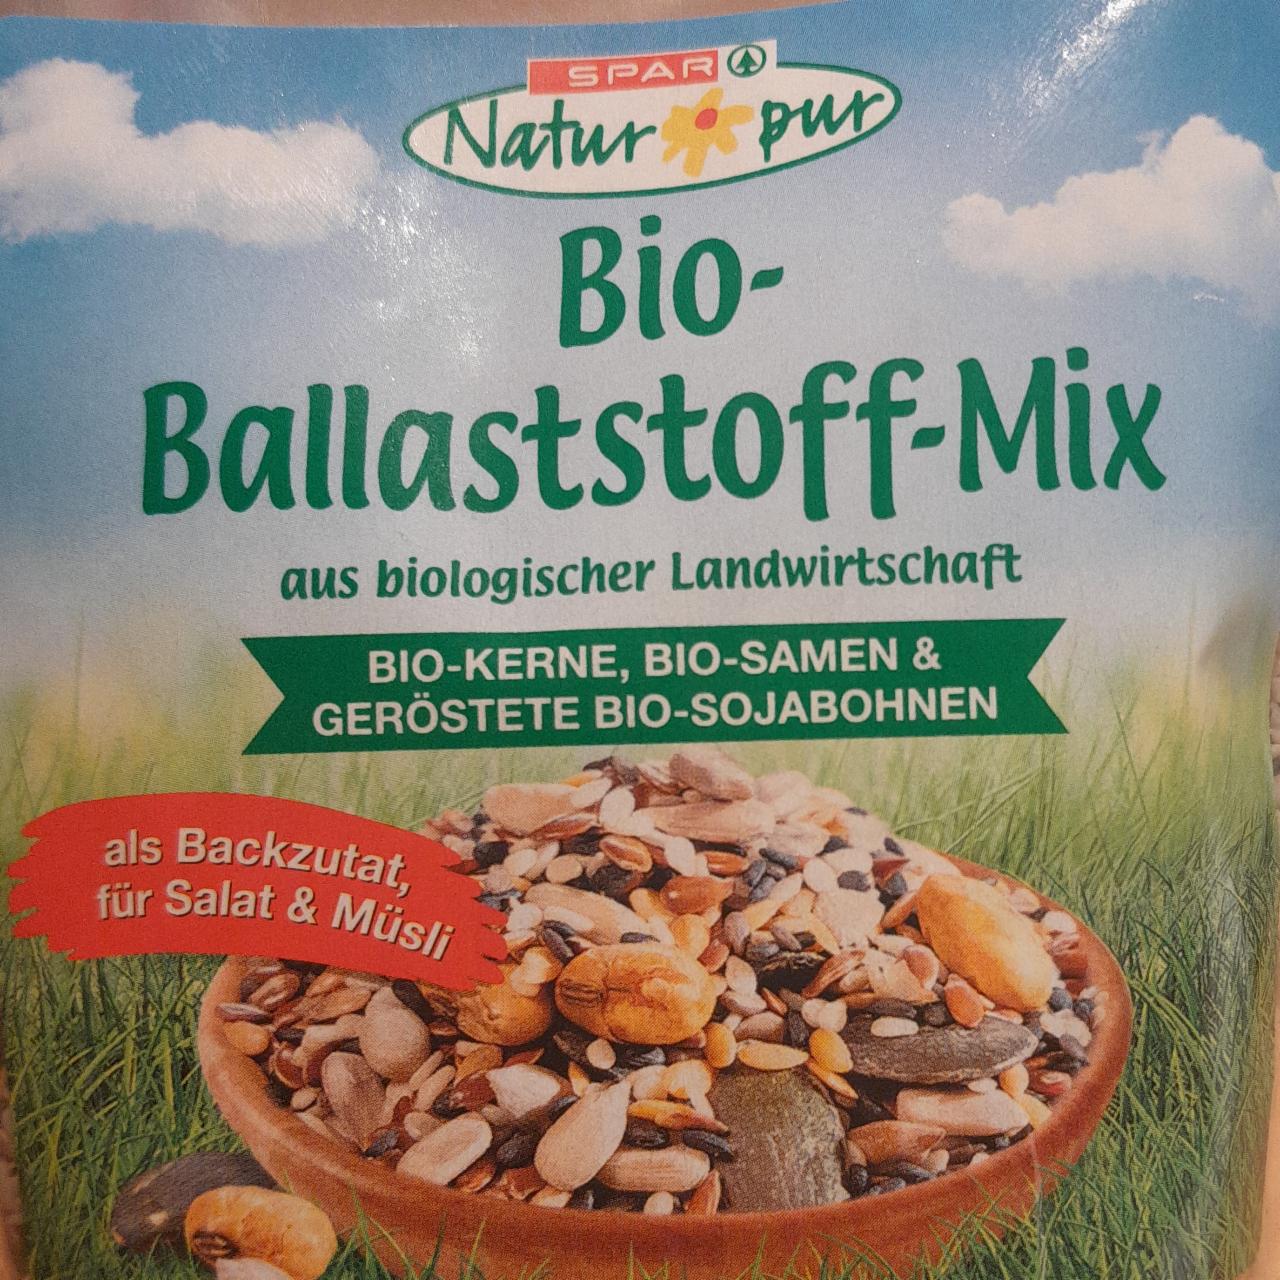 Fotografie - Bio-Ballaststoff-Mix SPAR Natur pur